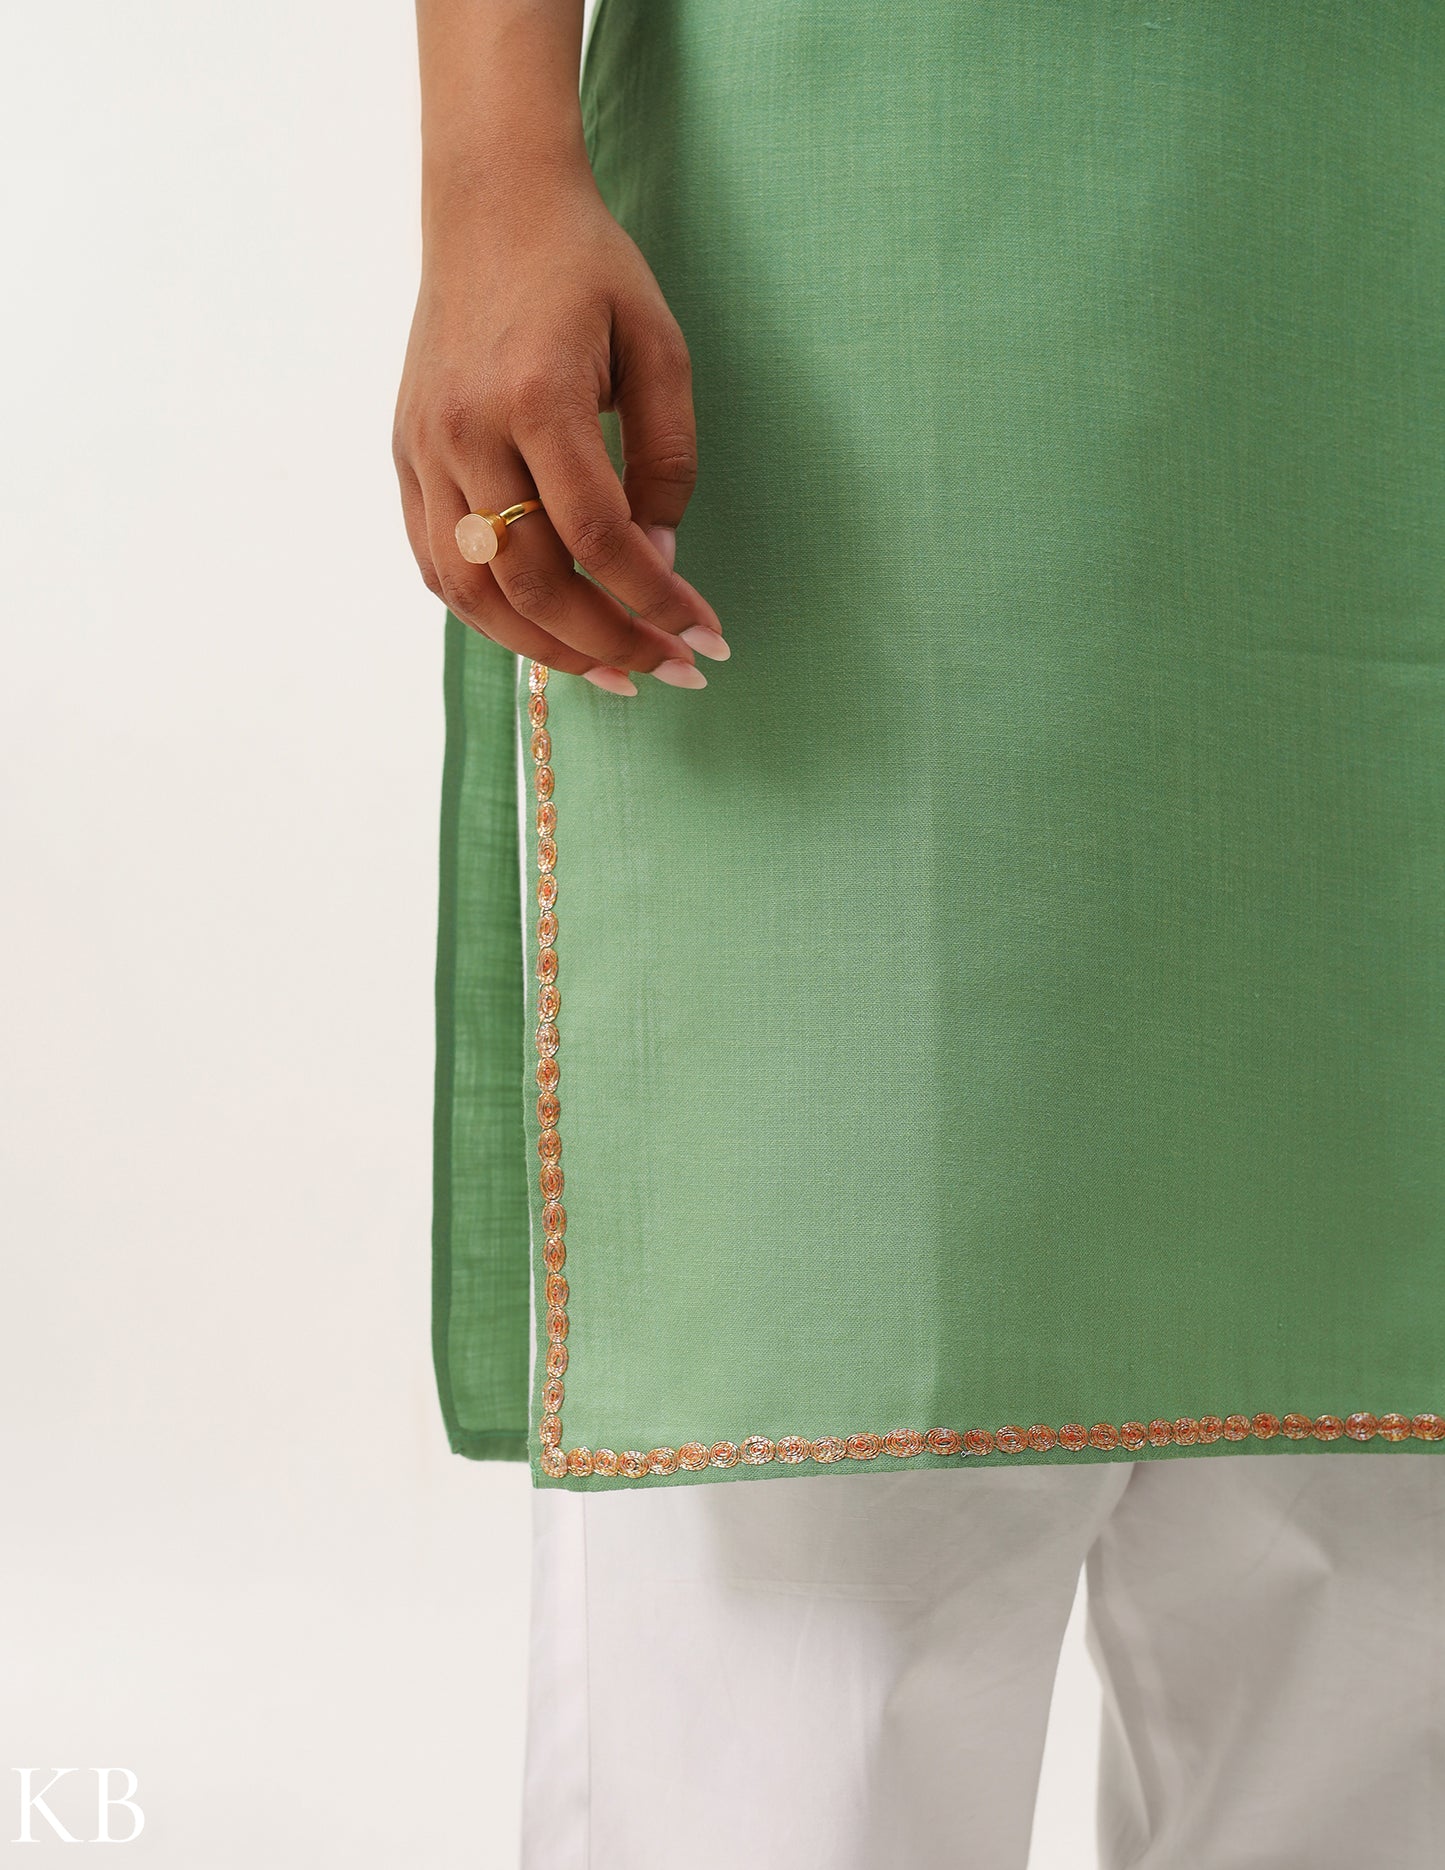 Seafoam Green Tilla Embroidered Cotton Kurti - Kashmir Box